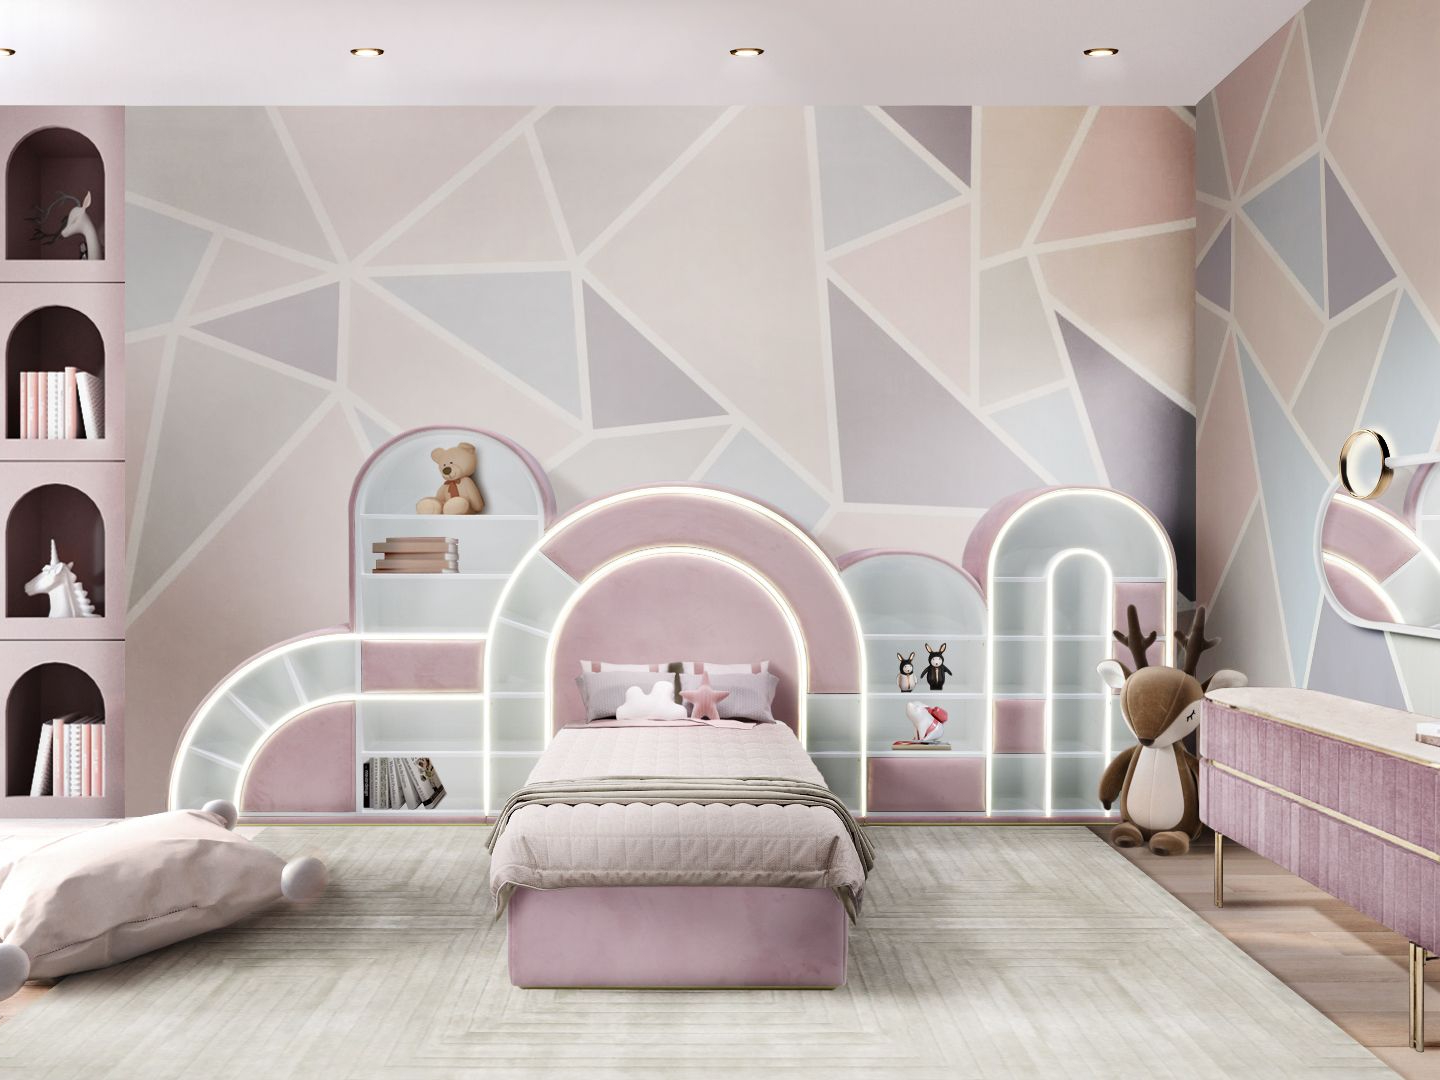 Low Maintenance Spacious Contemporary Kid's Bedroom Design | Livspace